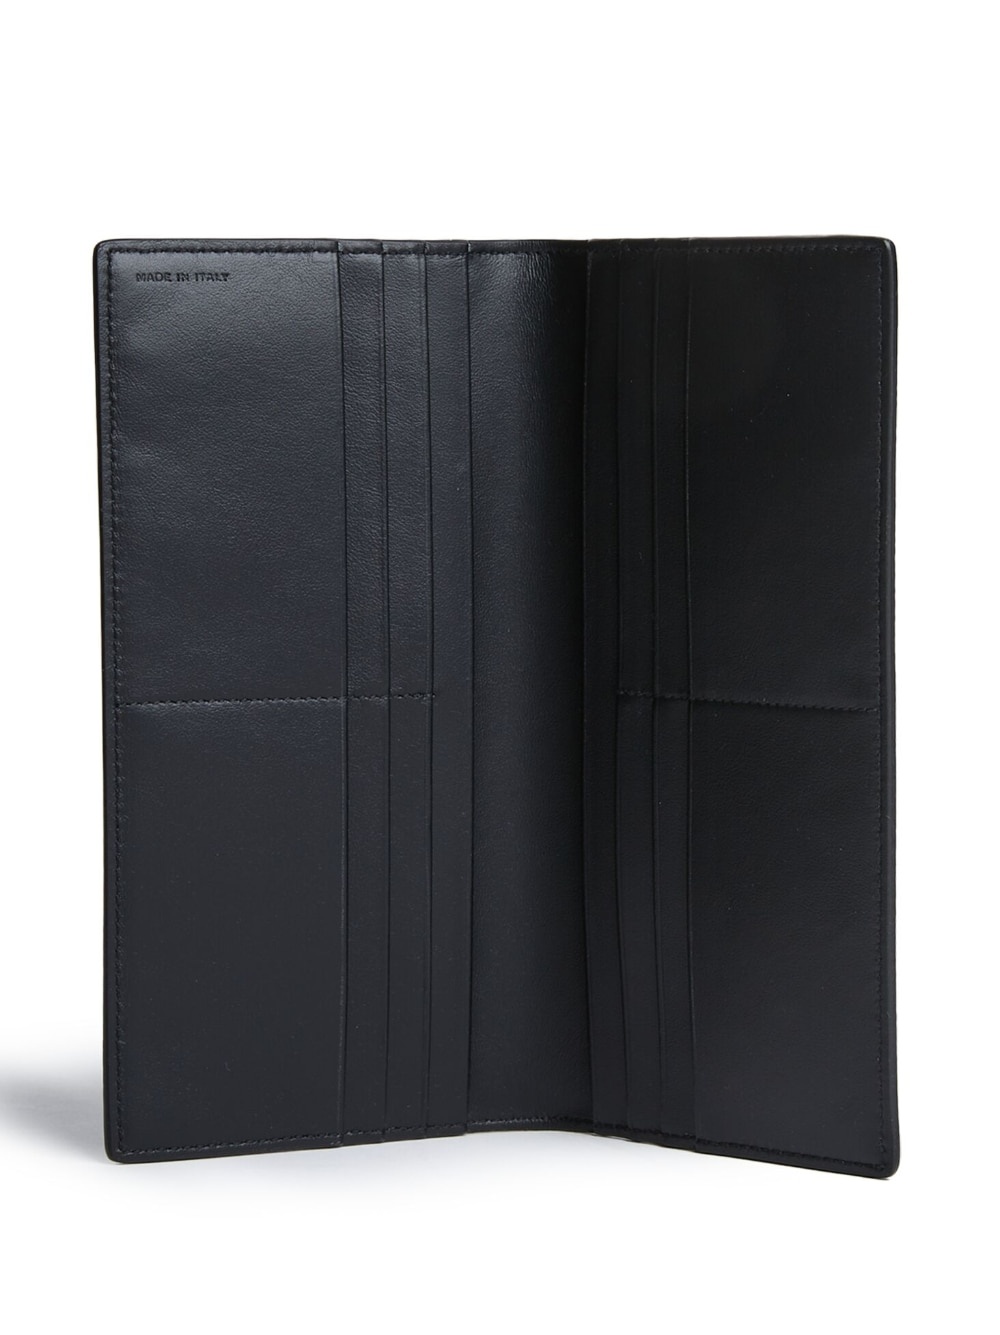 Panama slim bi-fold leather wallet - 3